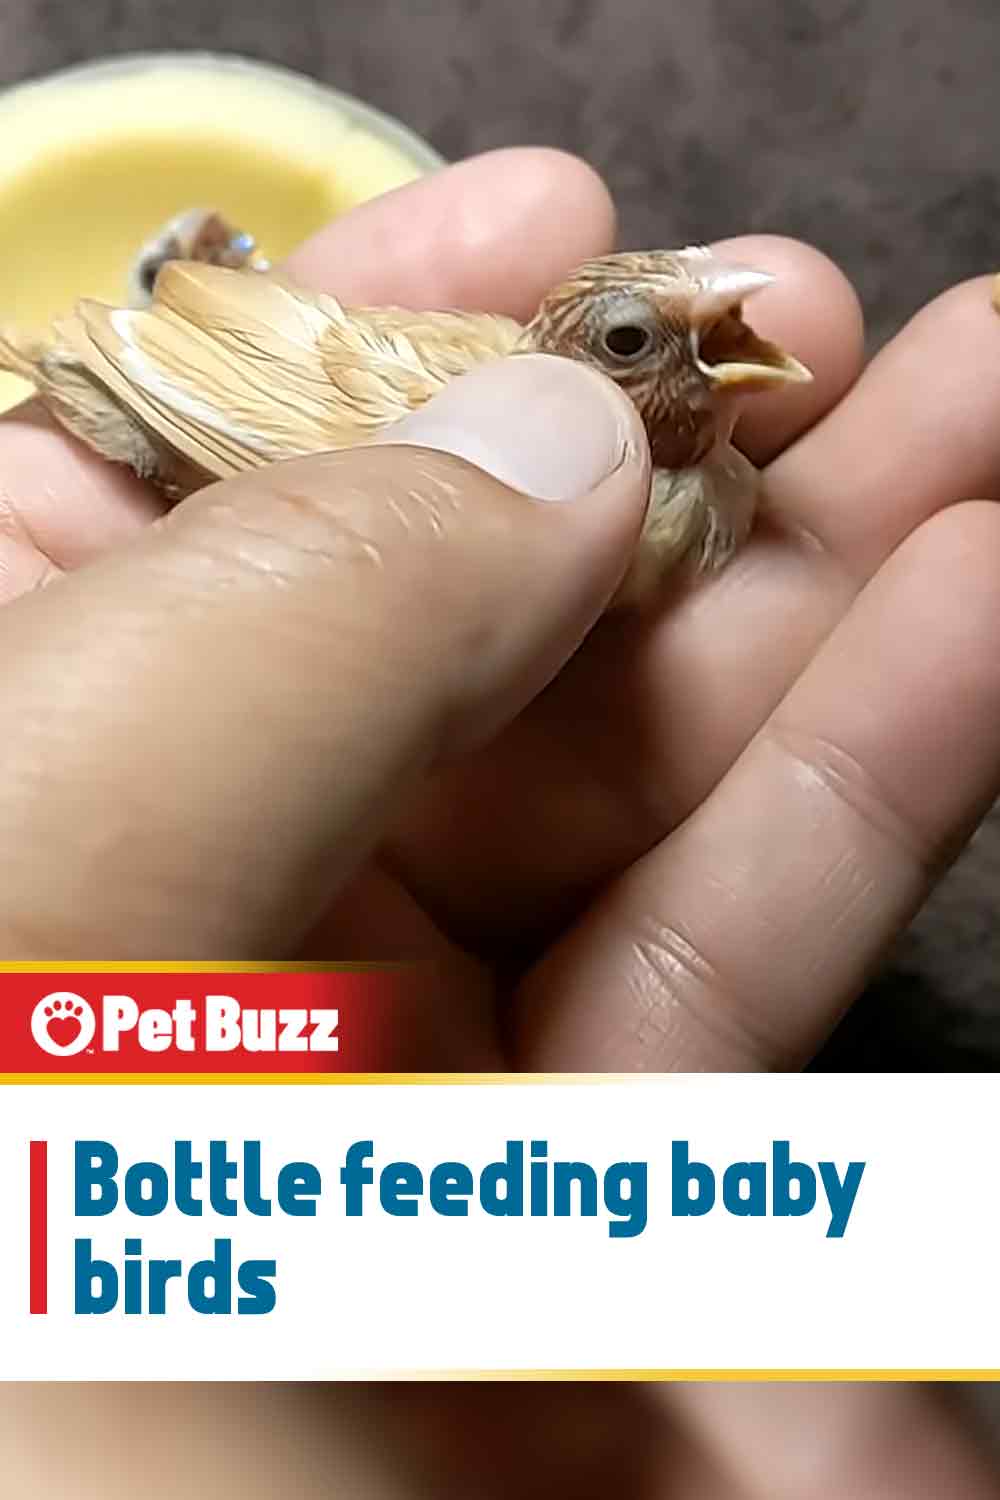 Bottle feeding baby birds